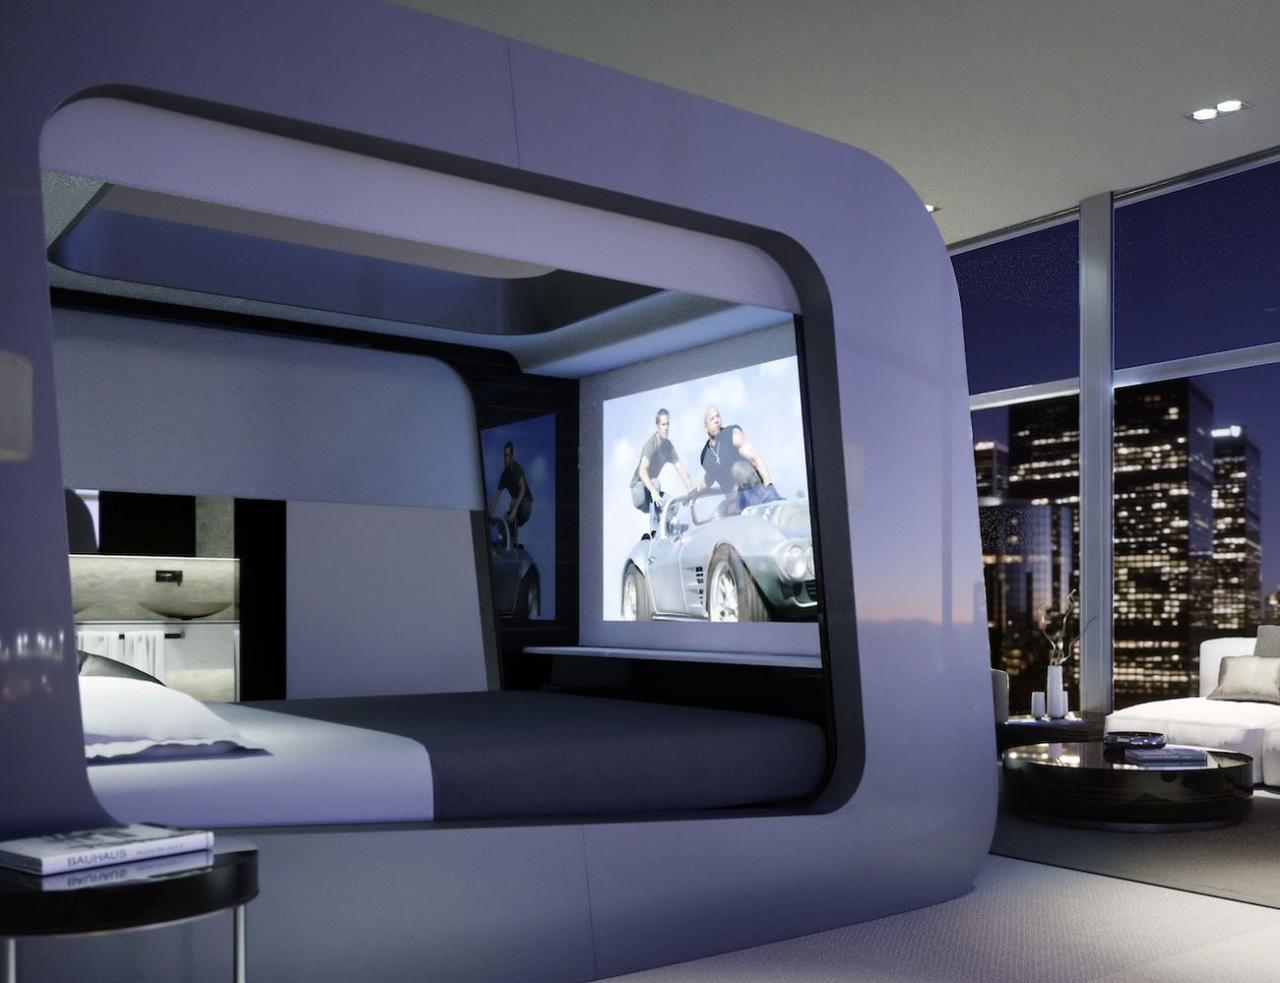 Bed smart tv tech built high modern hican dornob futuristic